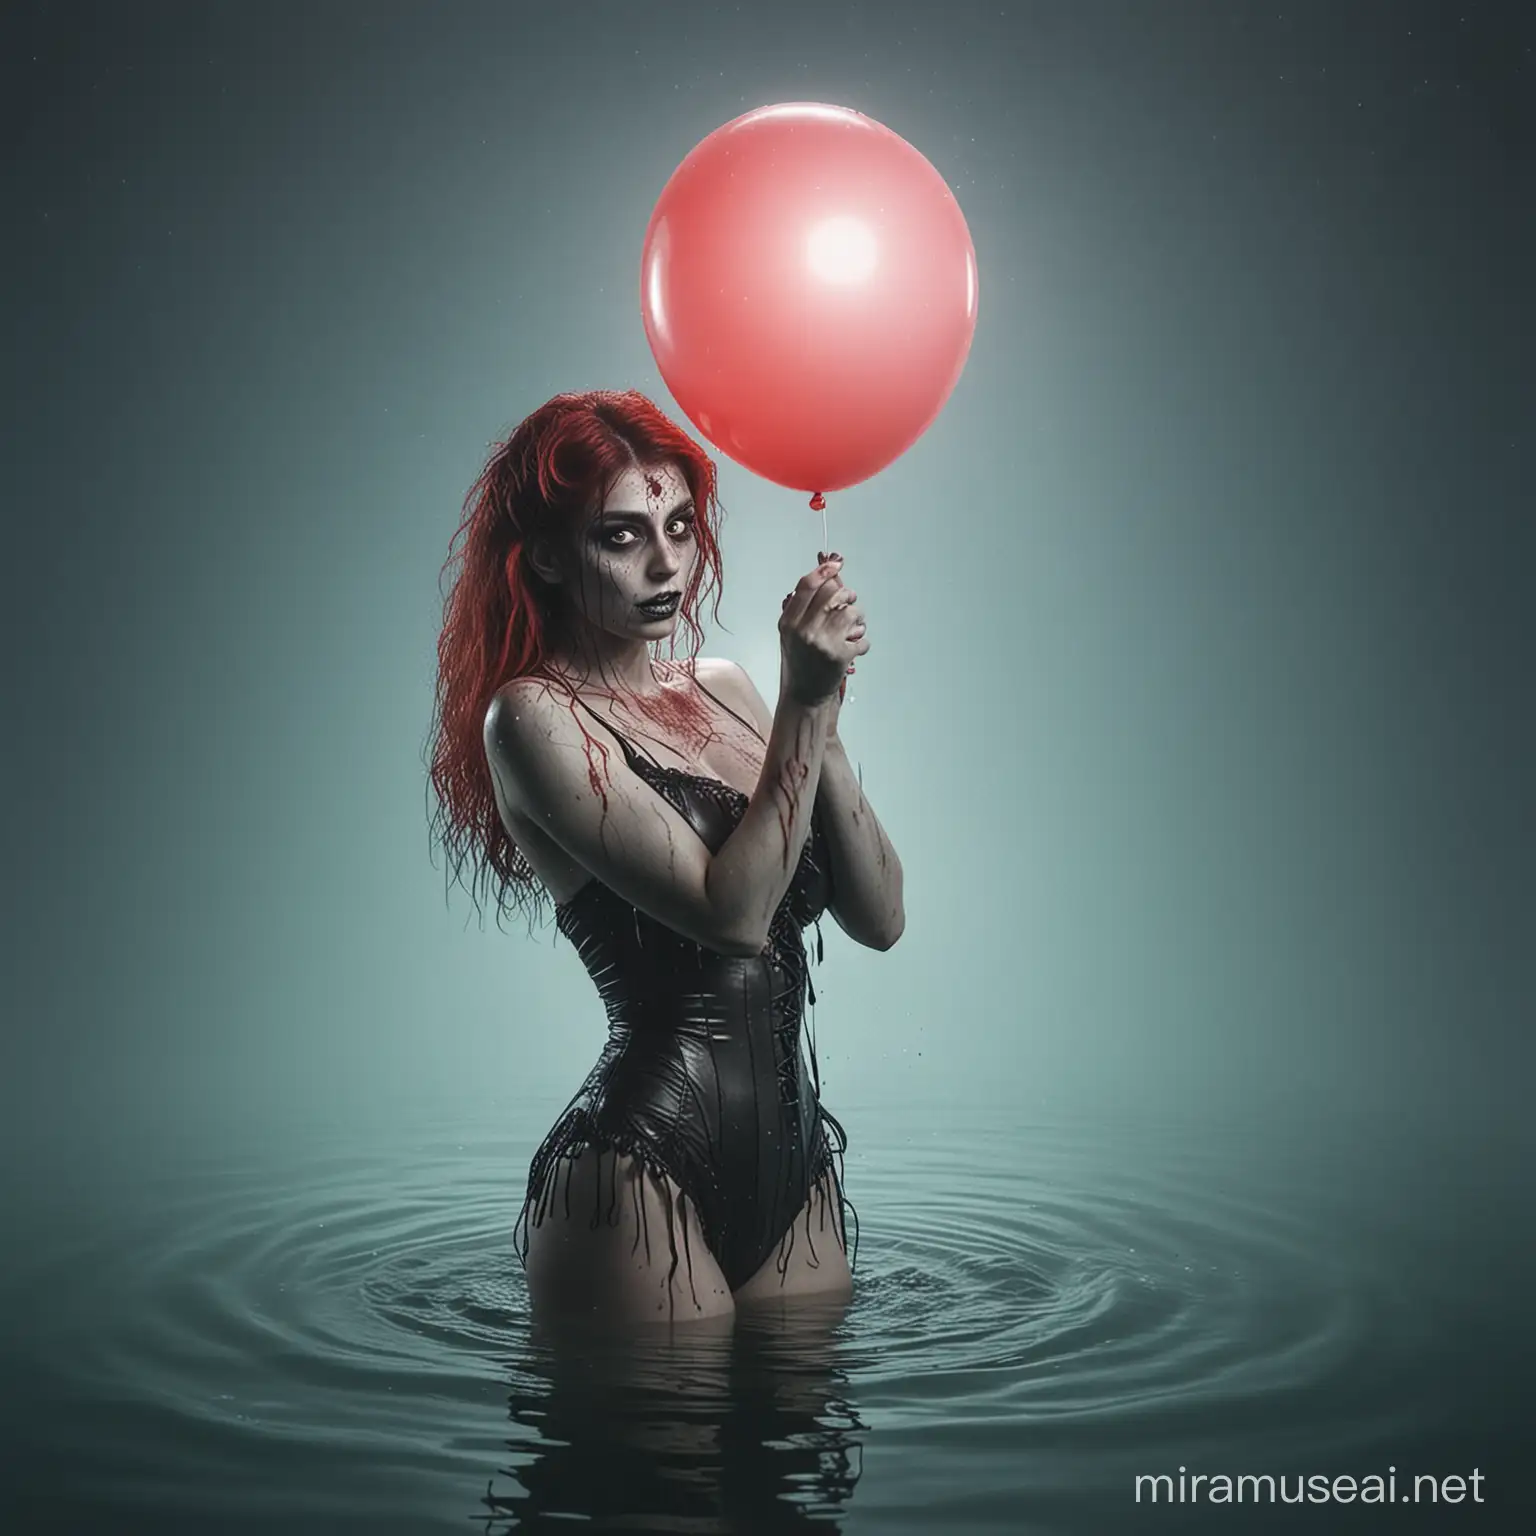 Gorgeous Zombie Woman Holding Balloon Underwater in Stunning Gradient